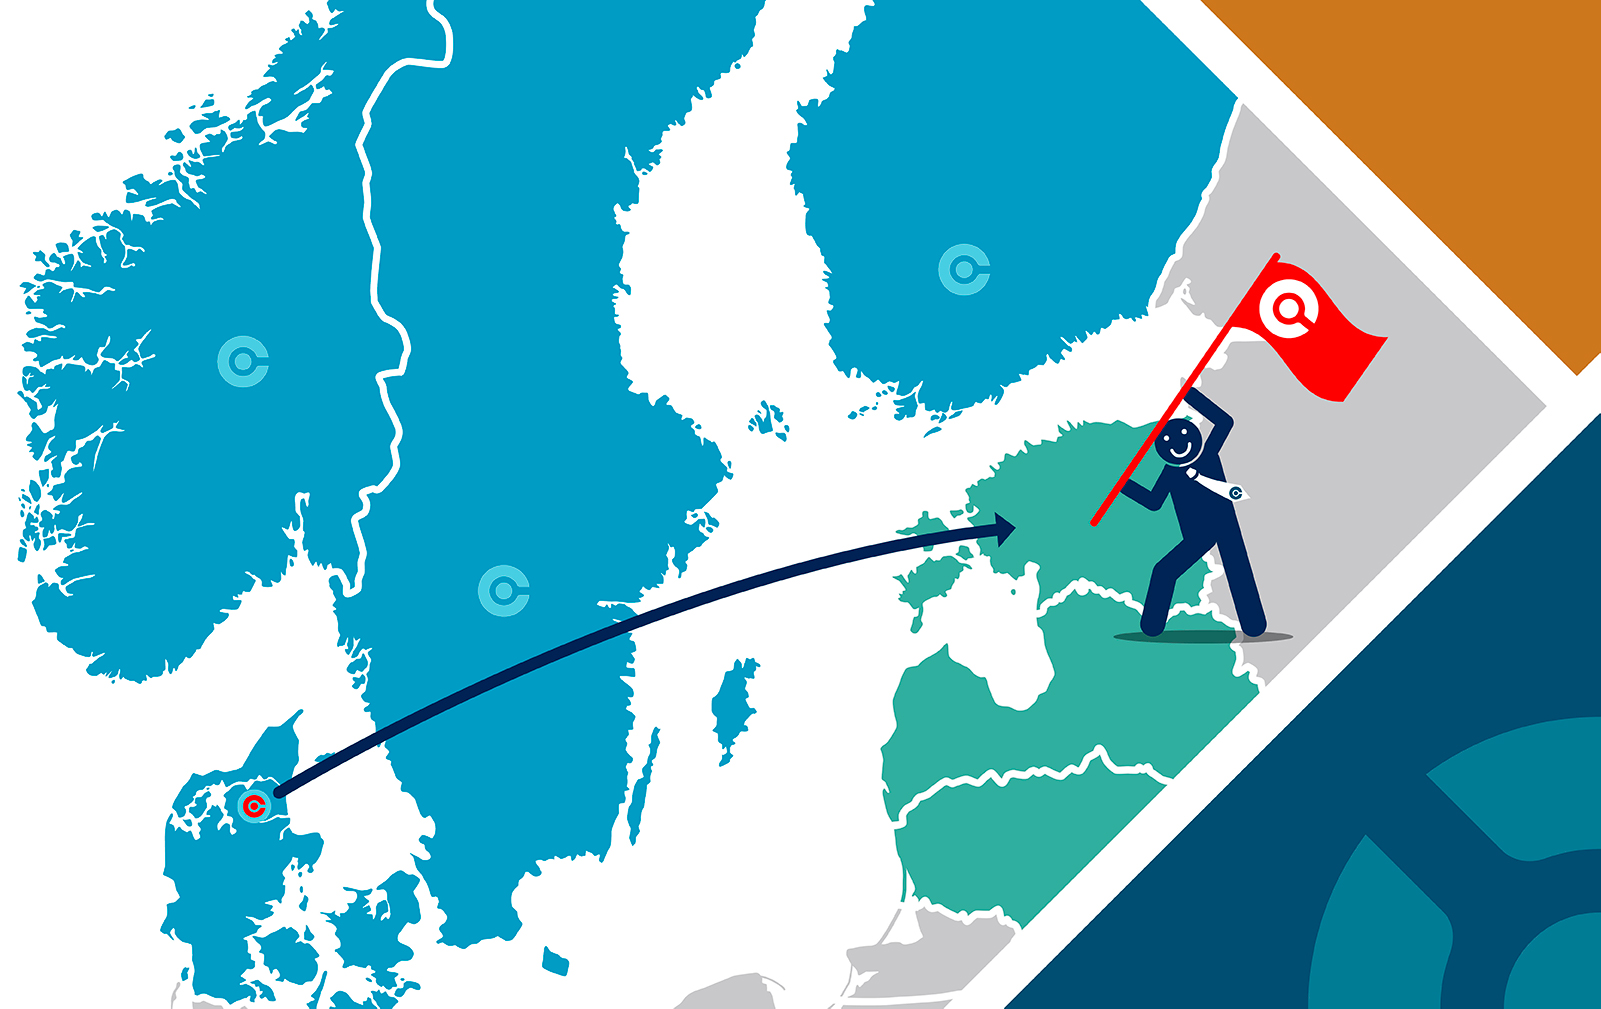 Find CORE-emt in Denmark, Sweden, Norway, Finland, Estonia, Lithuania & Latvia